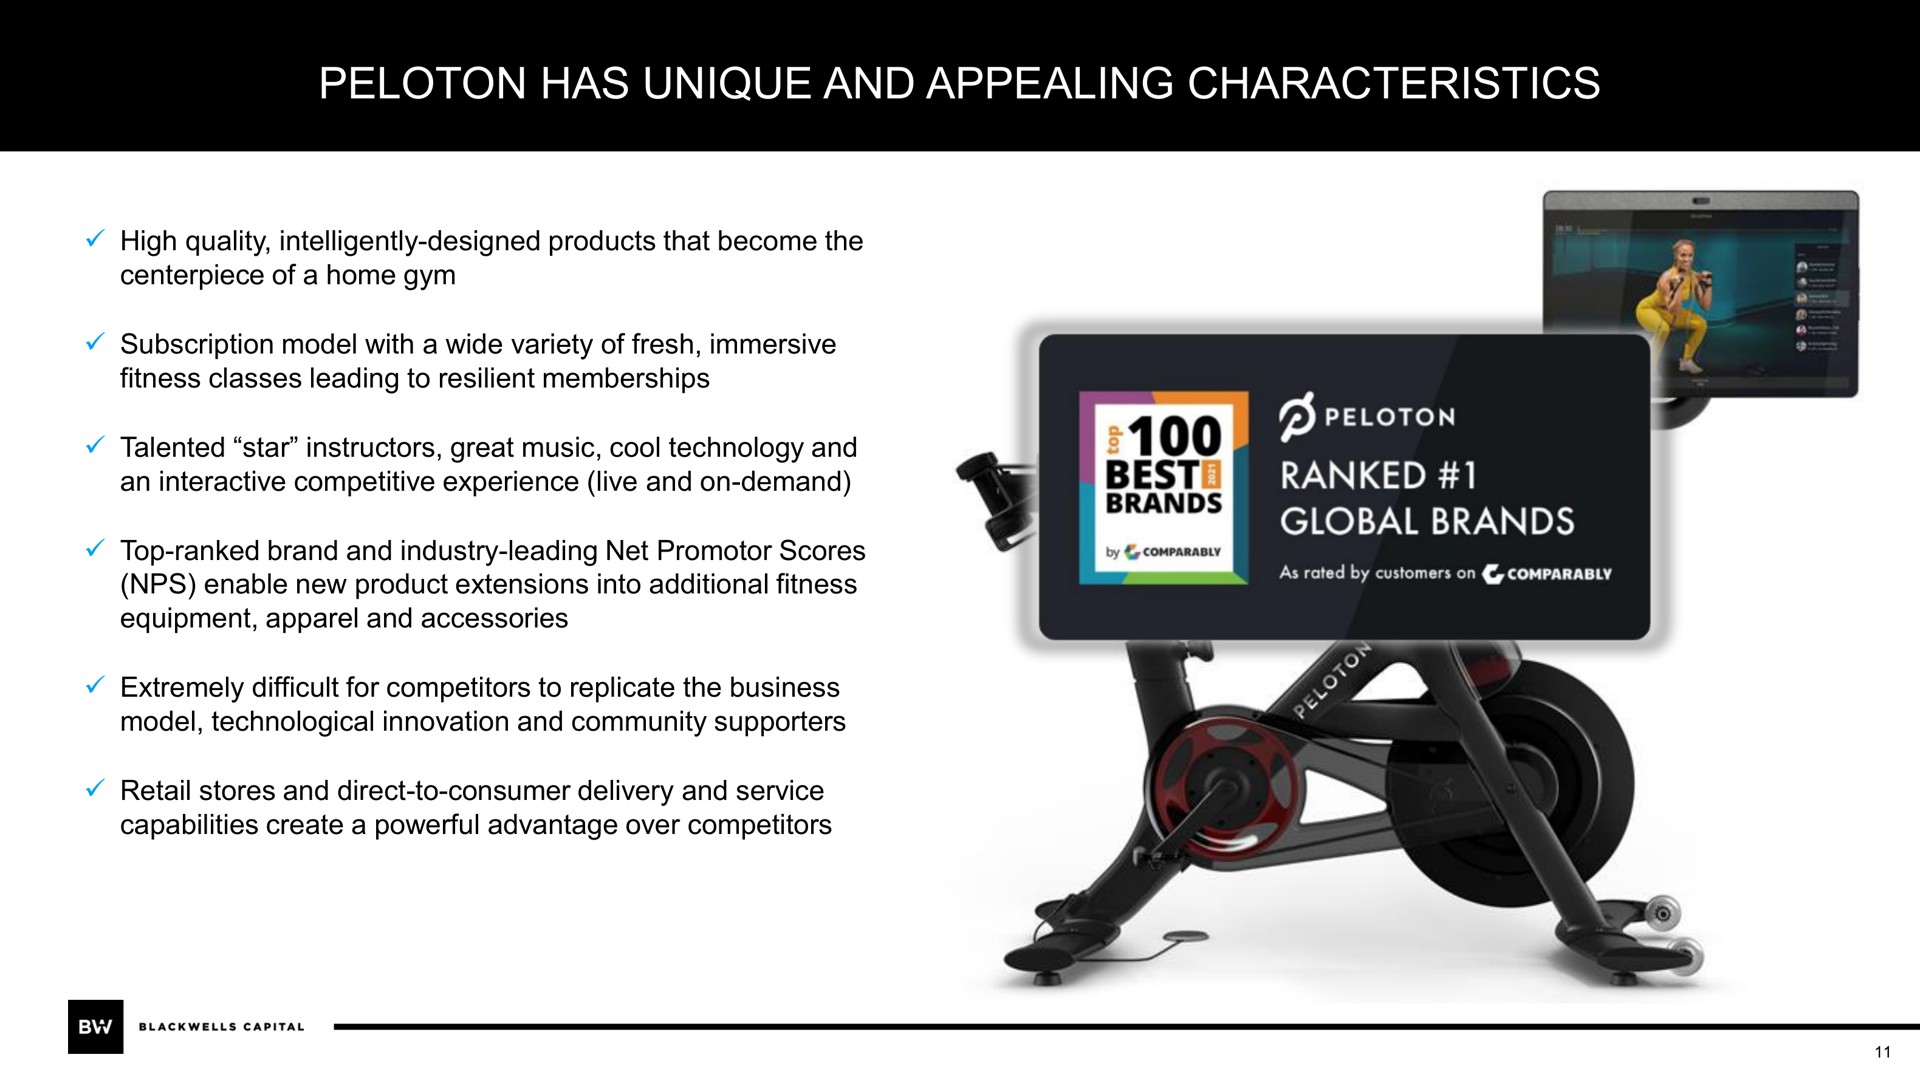 peloton has unique and appealing characteristics ranked global brands | Blackwells Capital